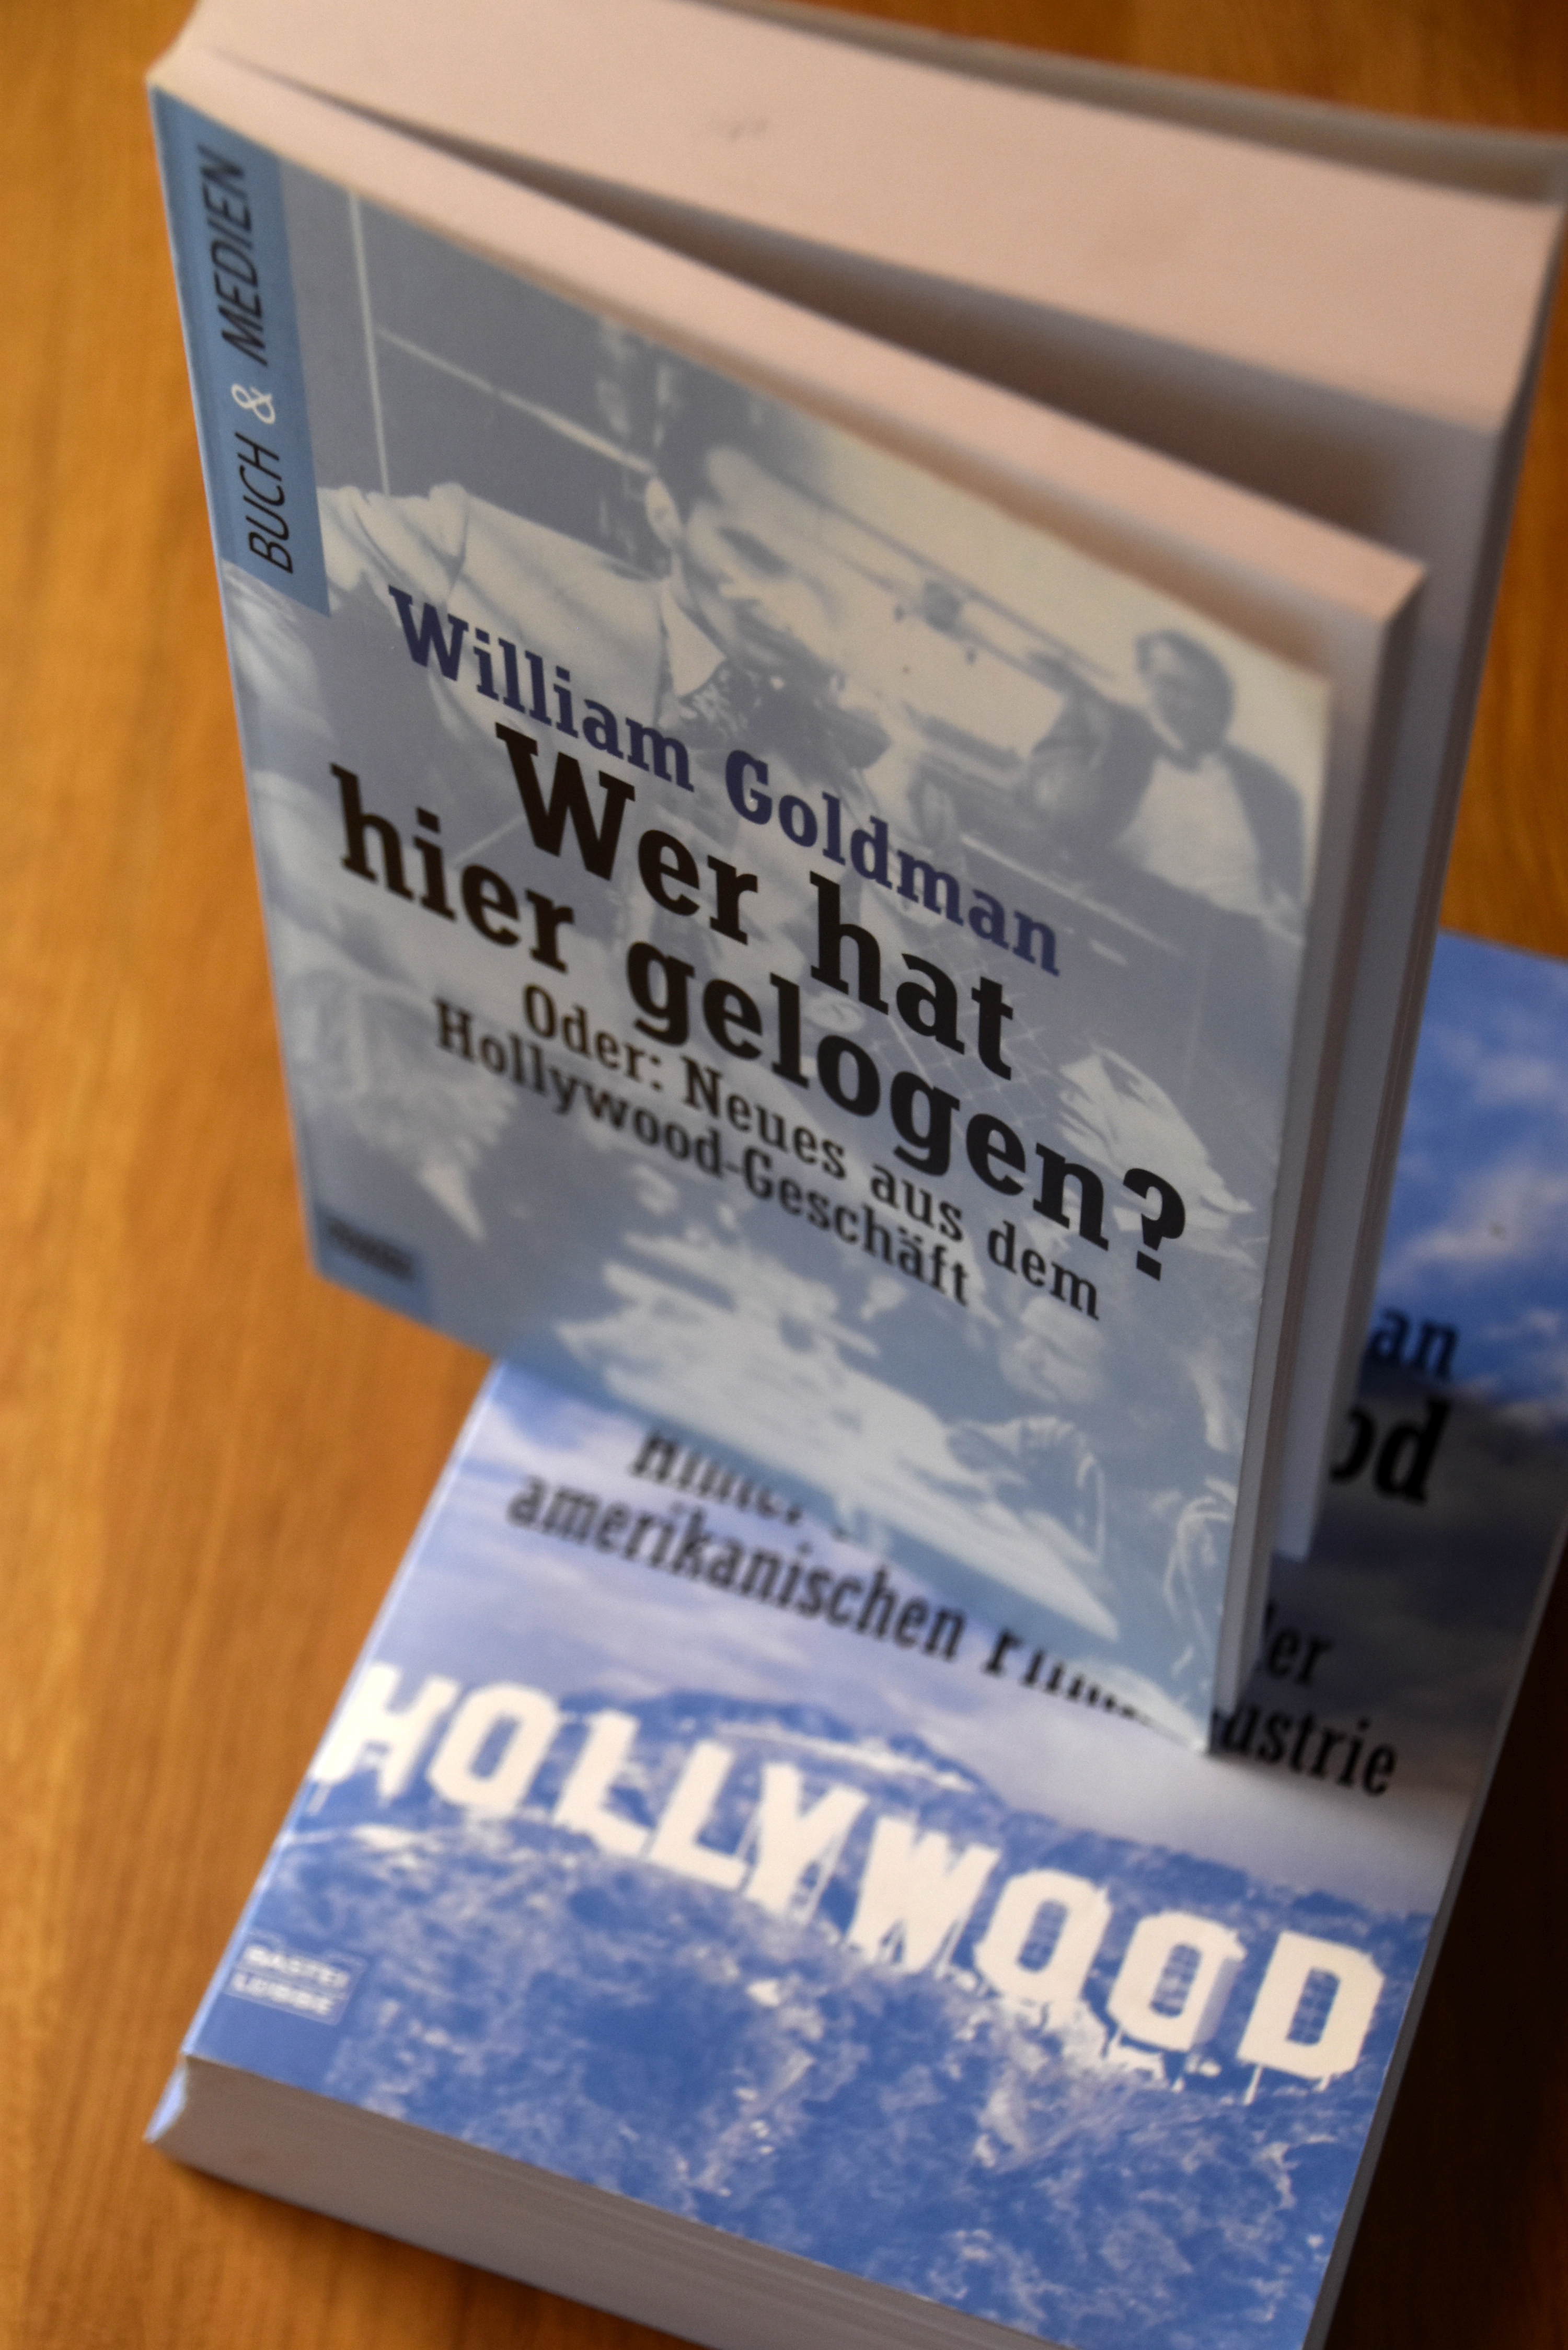 William Goldmans Bücher über Hollywood